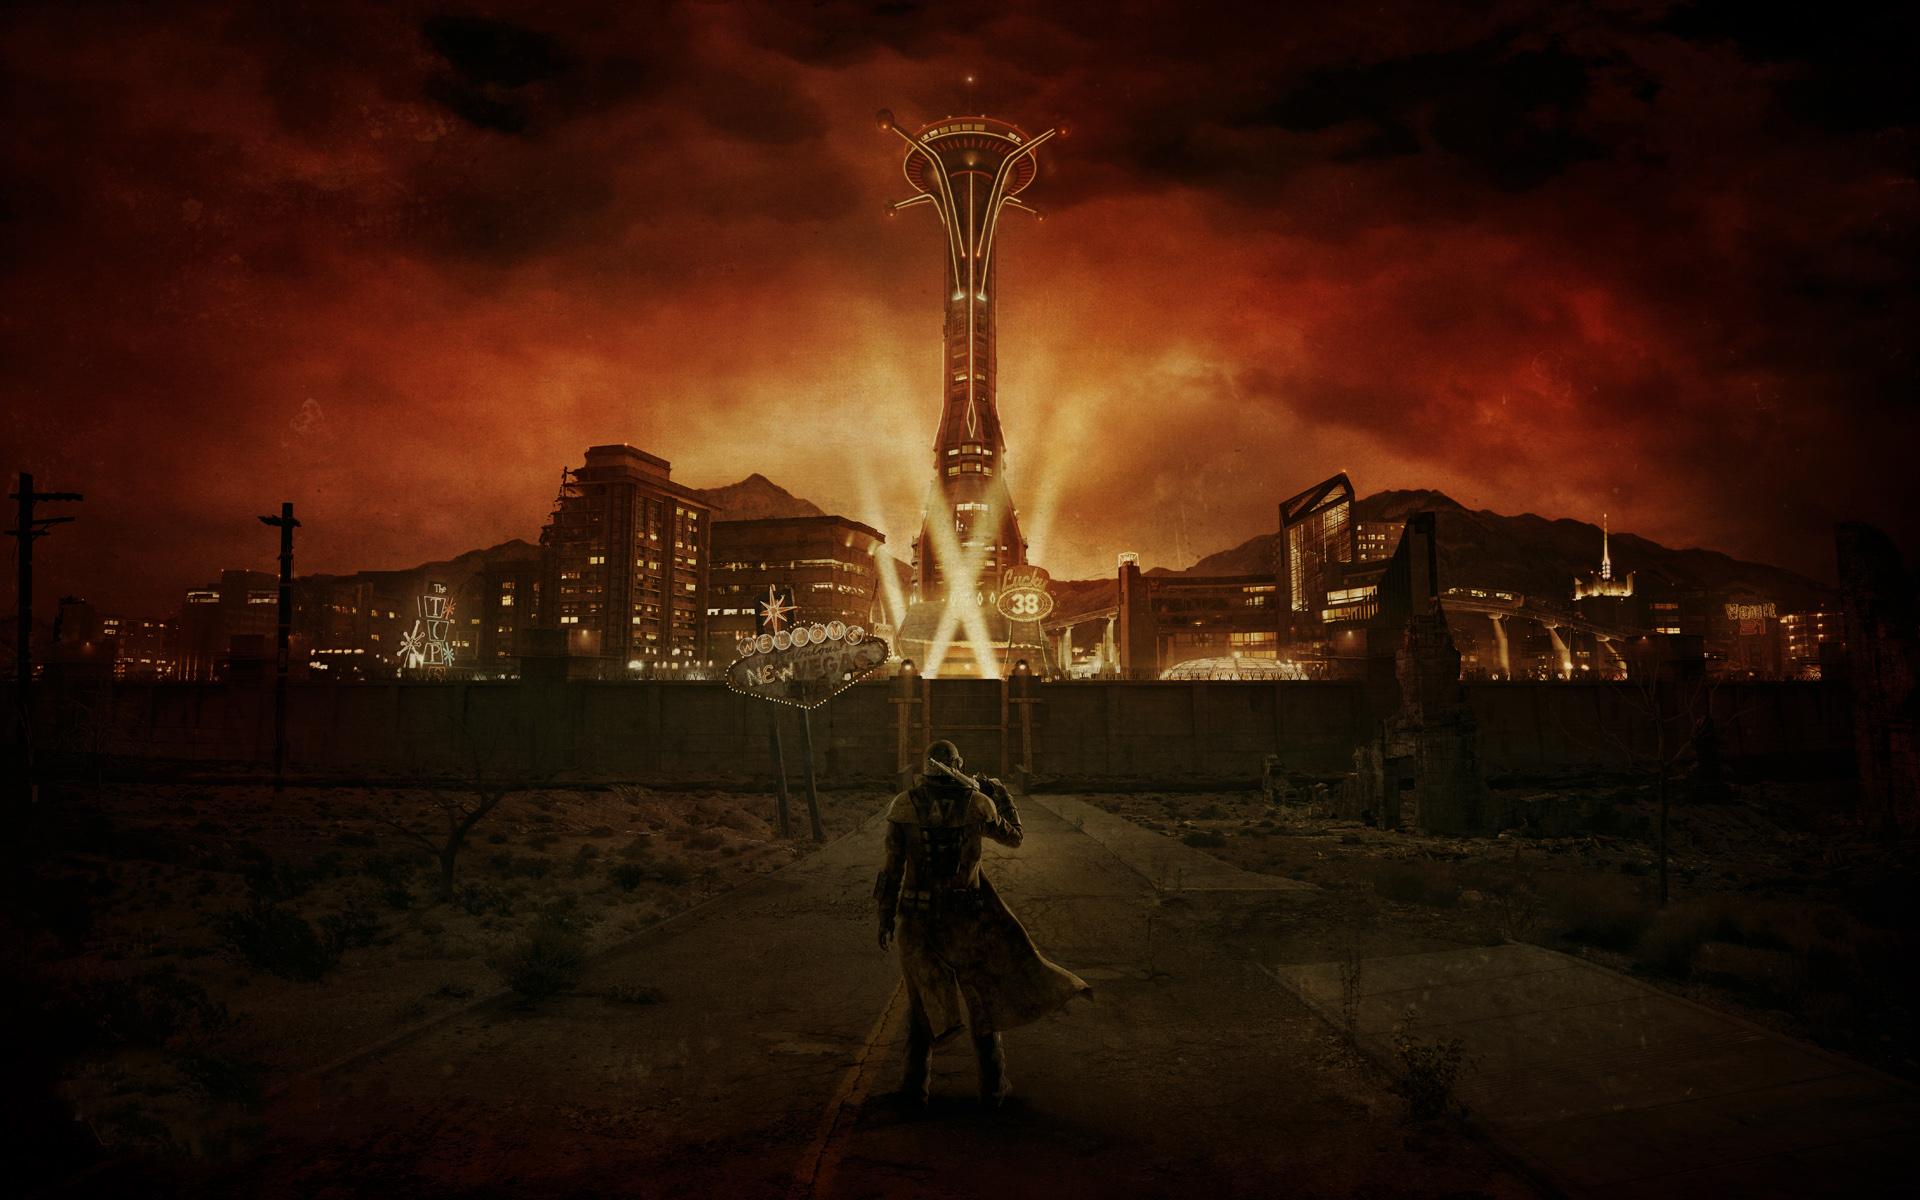 Fallout: New Vegas Art